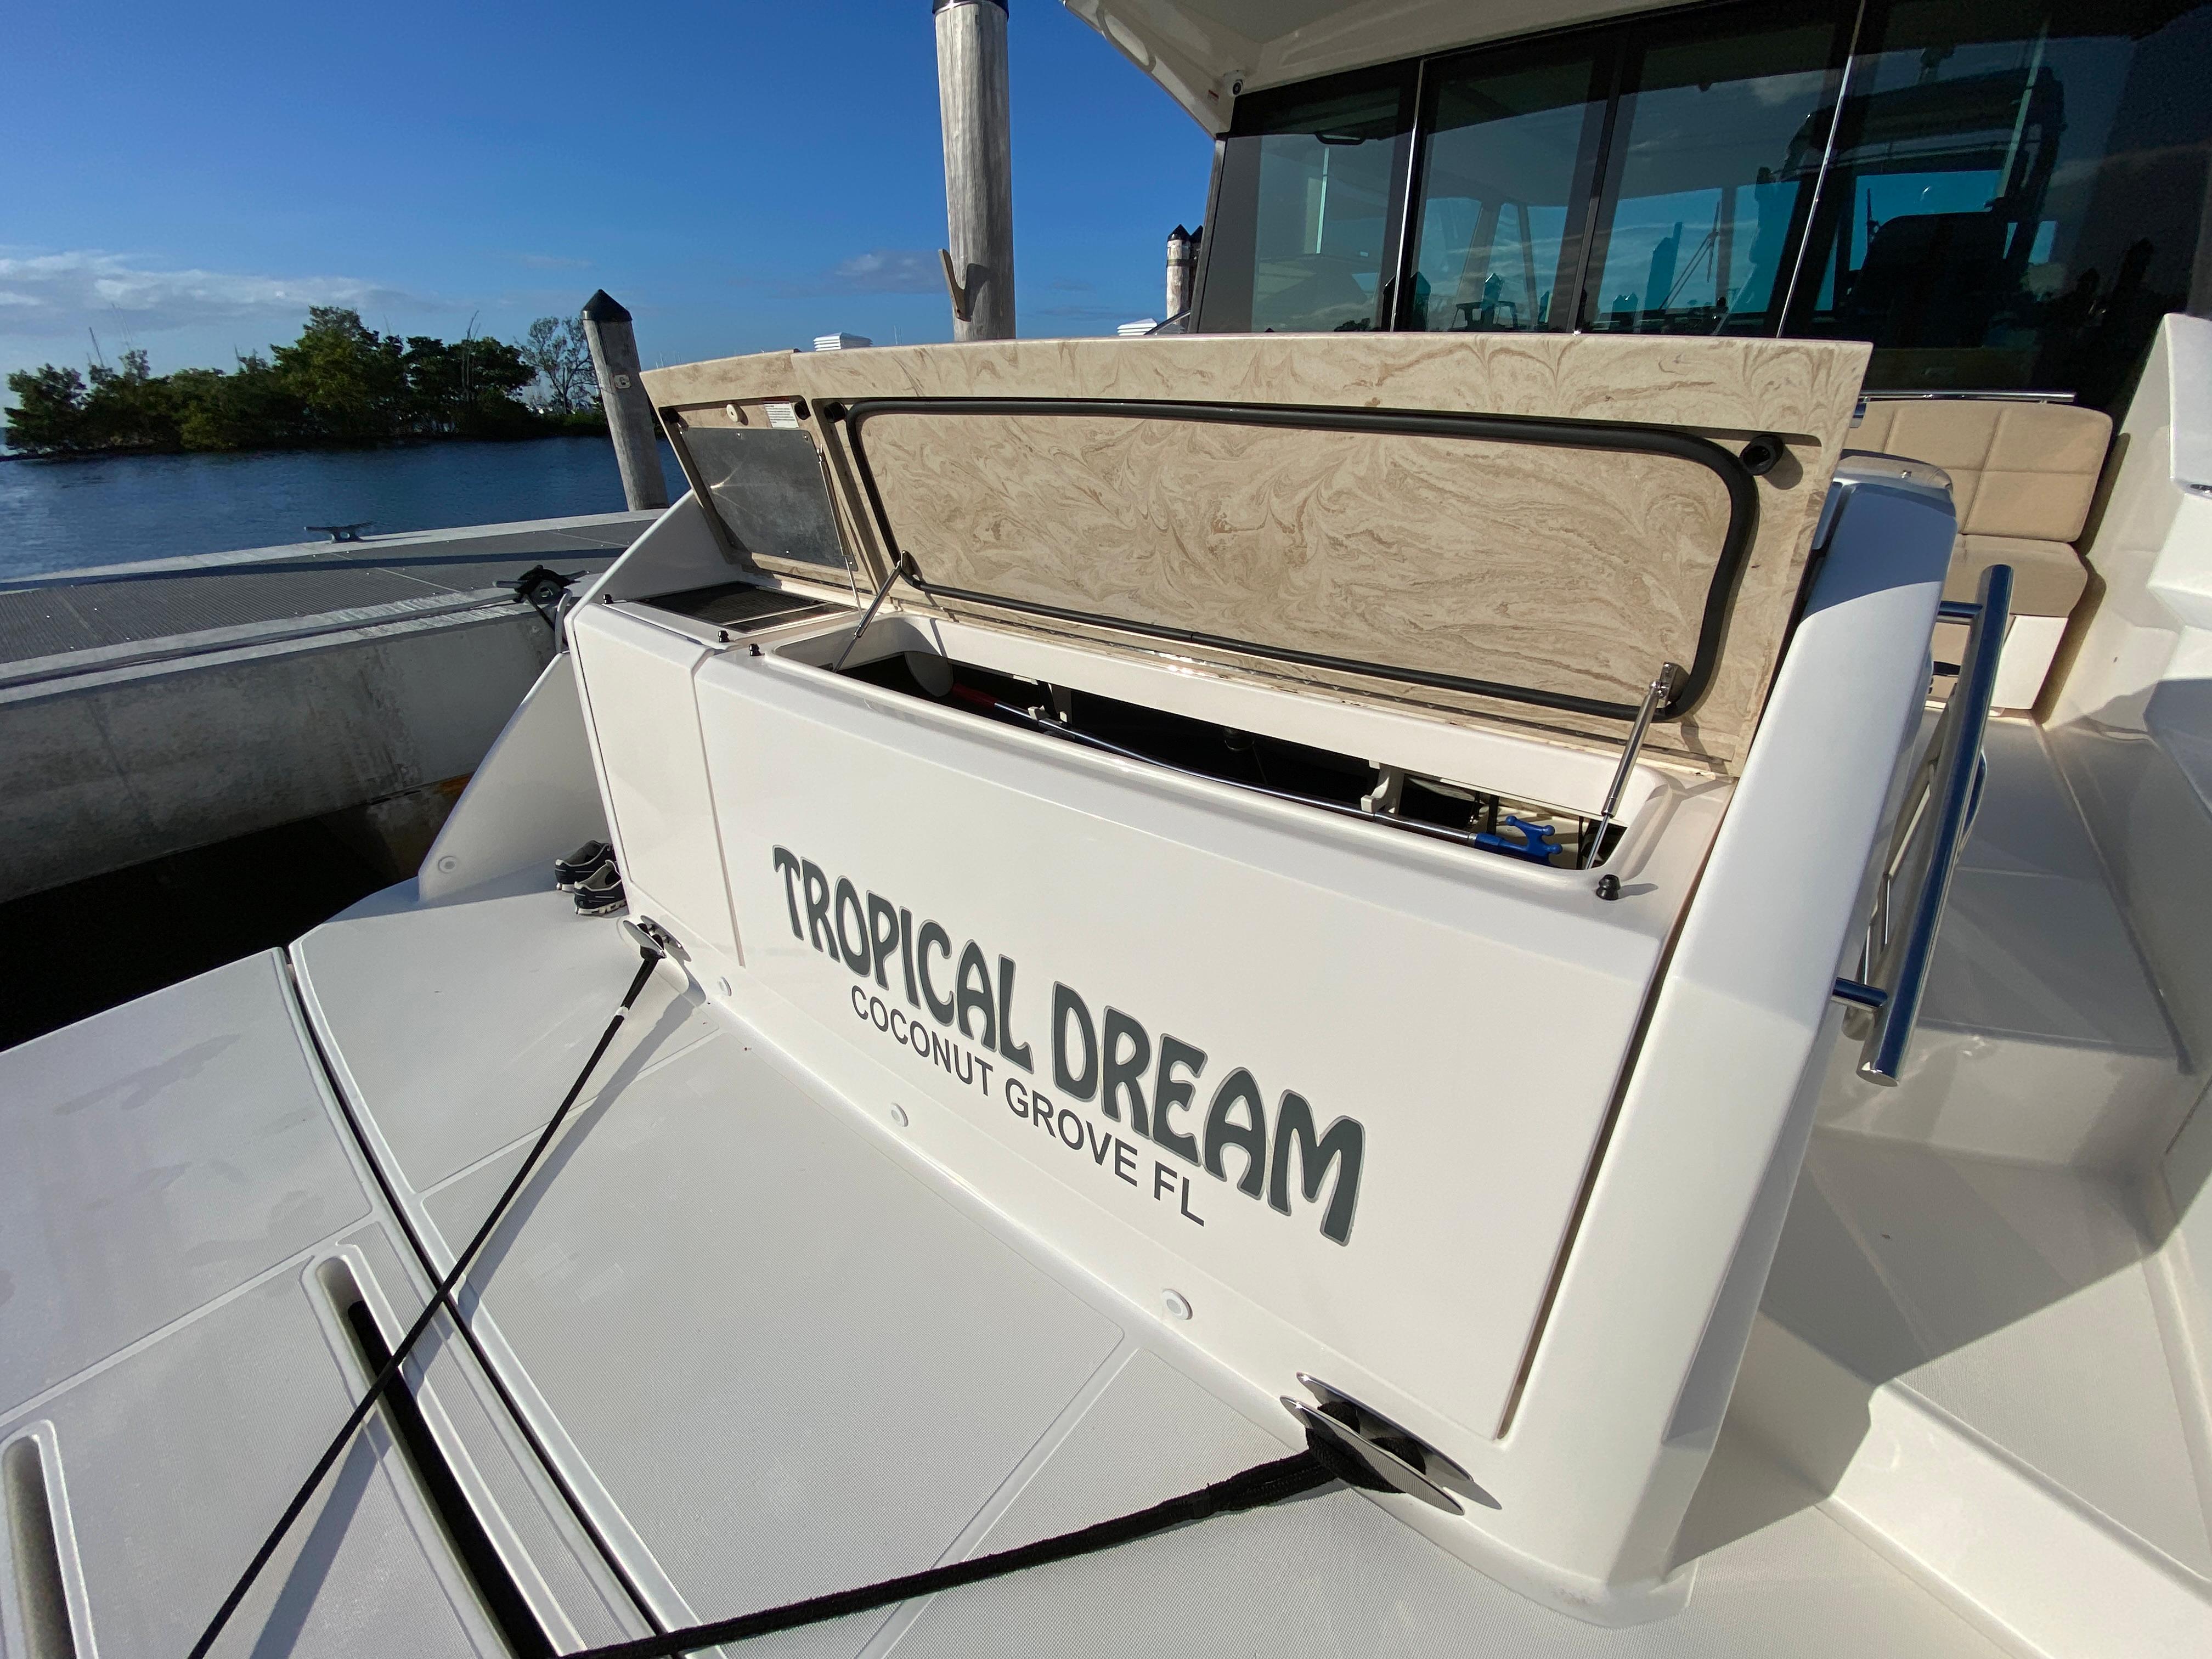 Tropical Dreams Yacht Photos Pics 